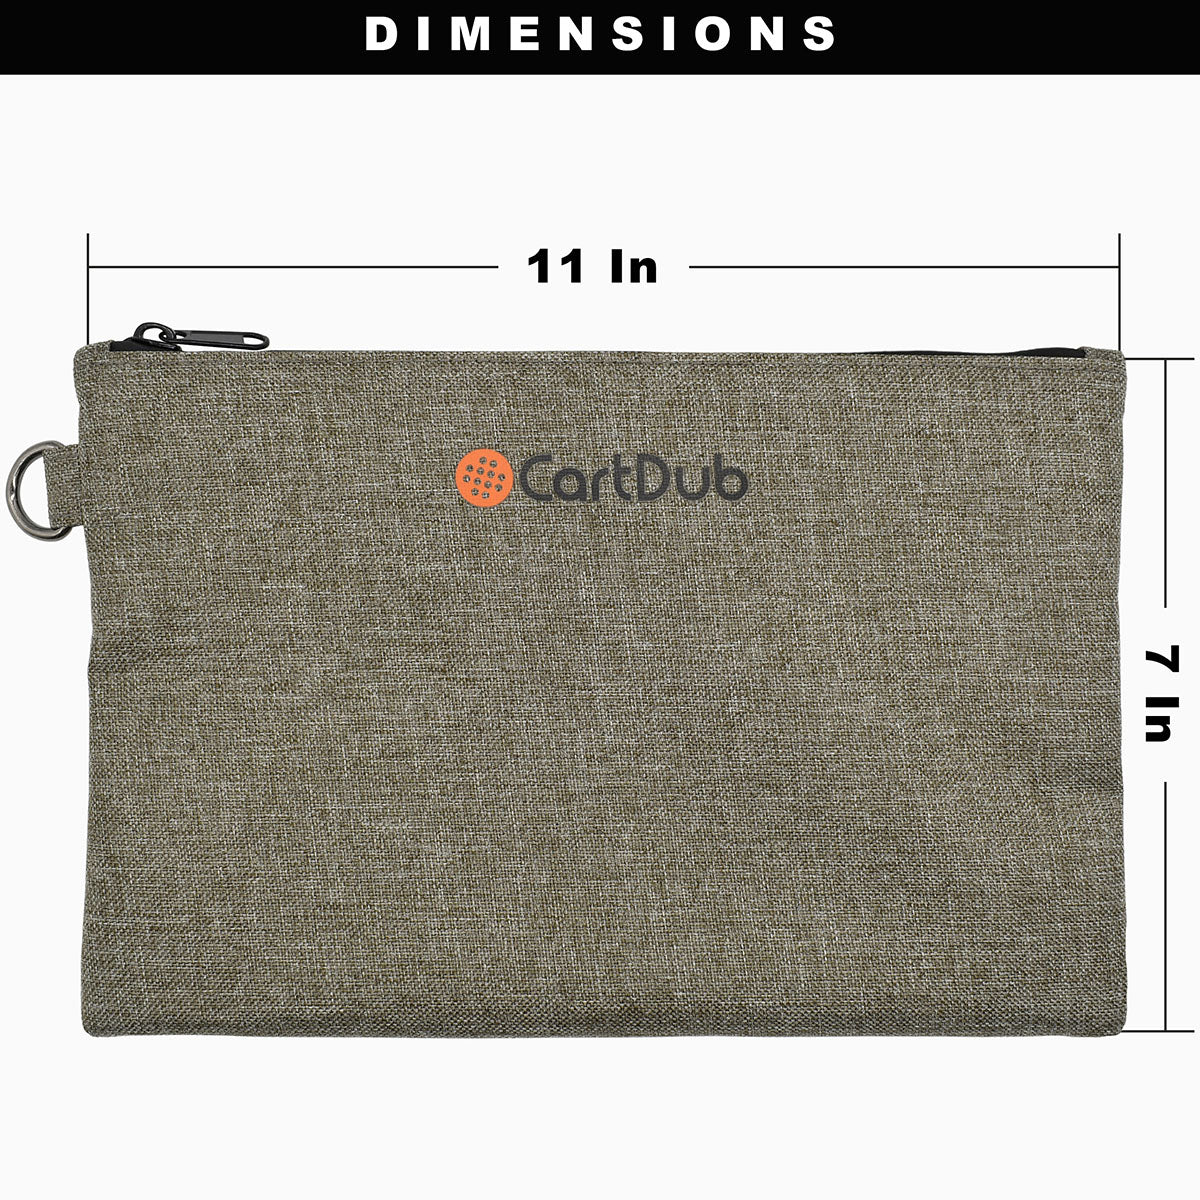 CartDub Smell Proof Bag Dimensions